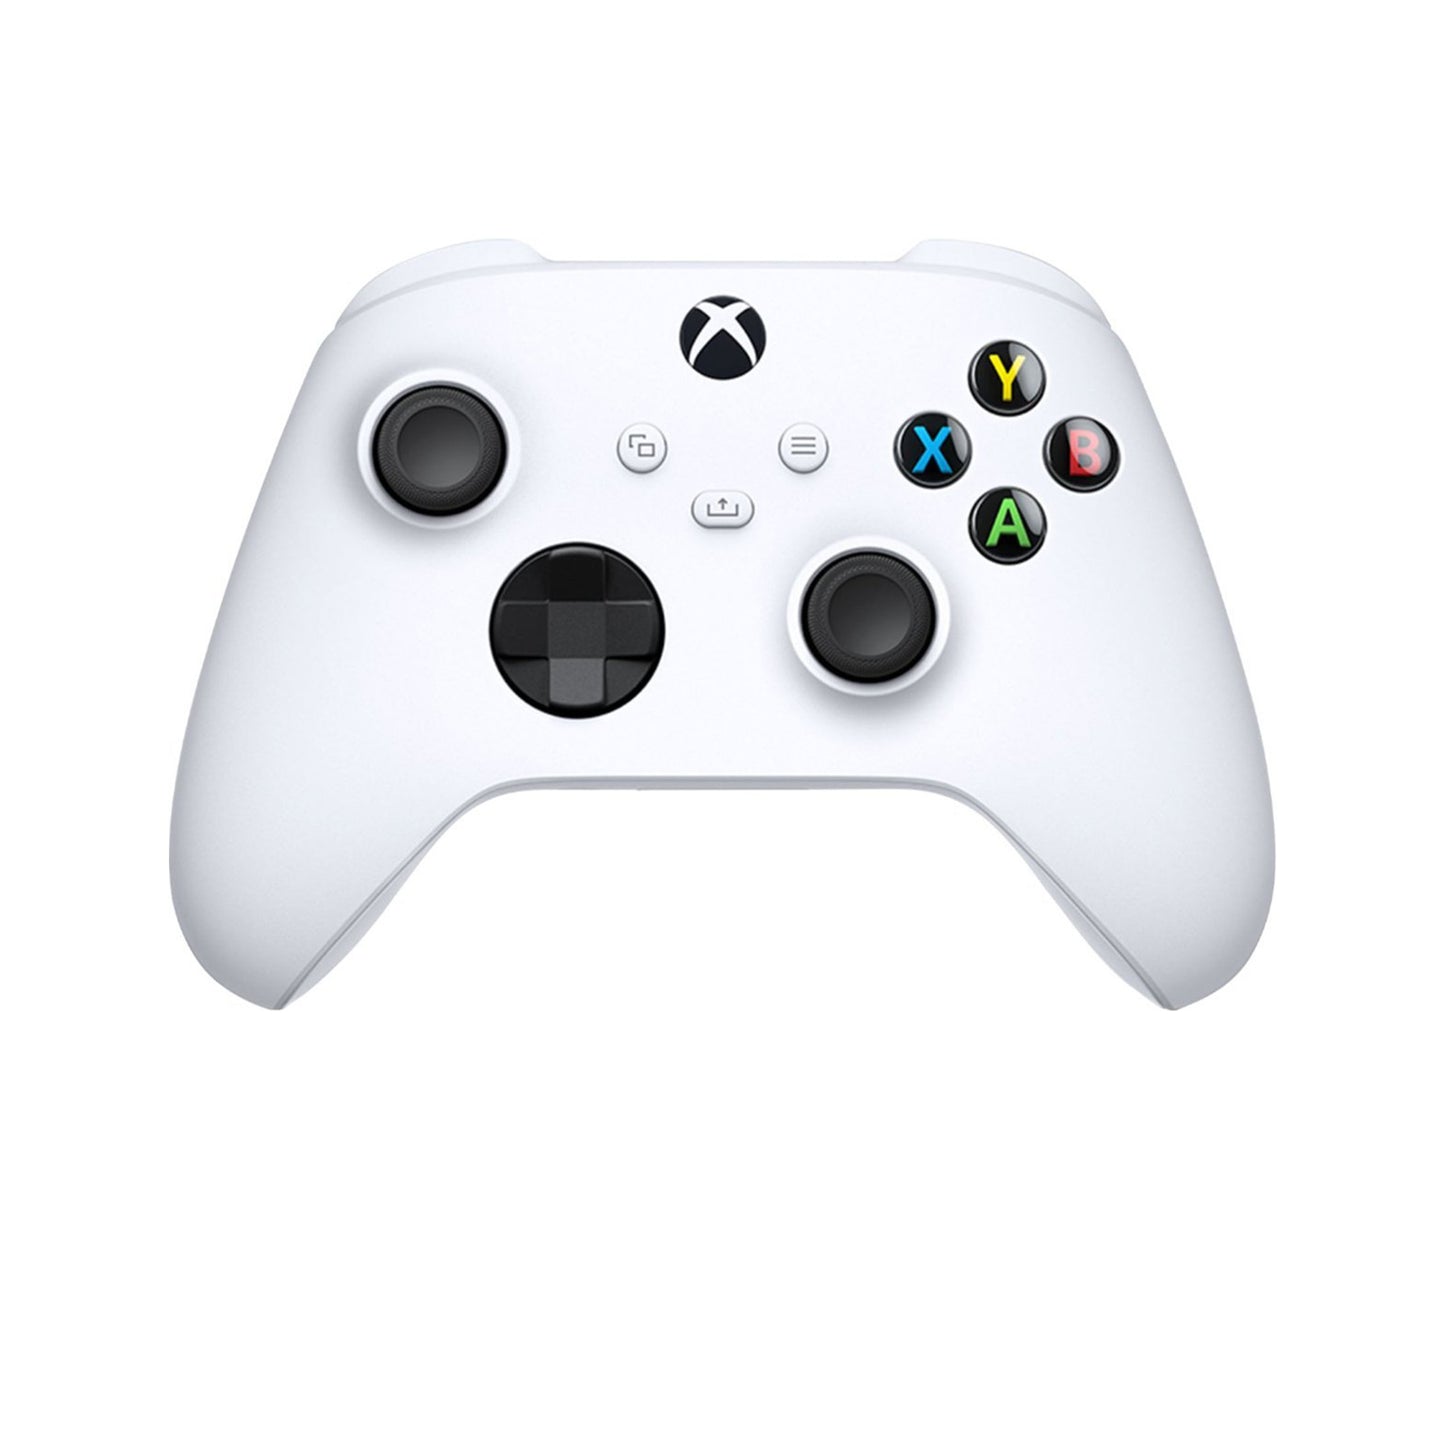 Microsoft - وحدة تحكم Xbox Series S سعة 512 جيجابايت رقمية بالكامل (ألعاب خالية من الأقراص) - أبيض 